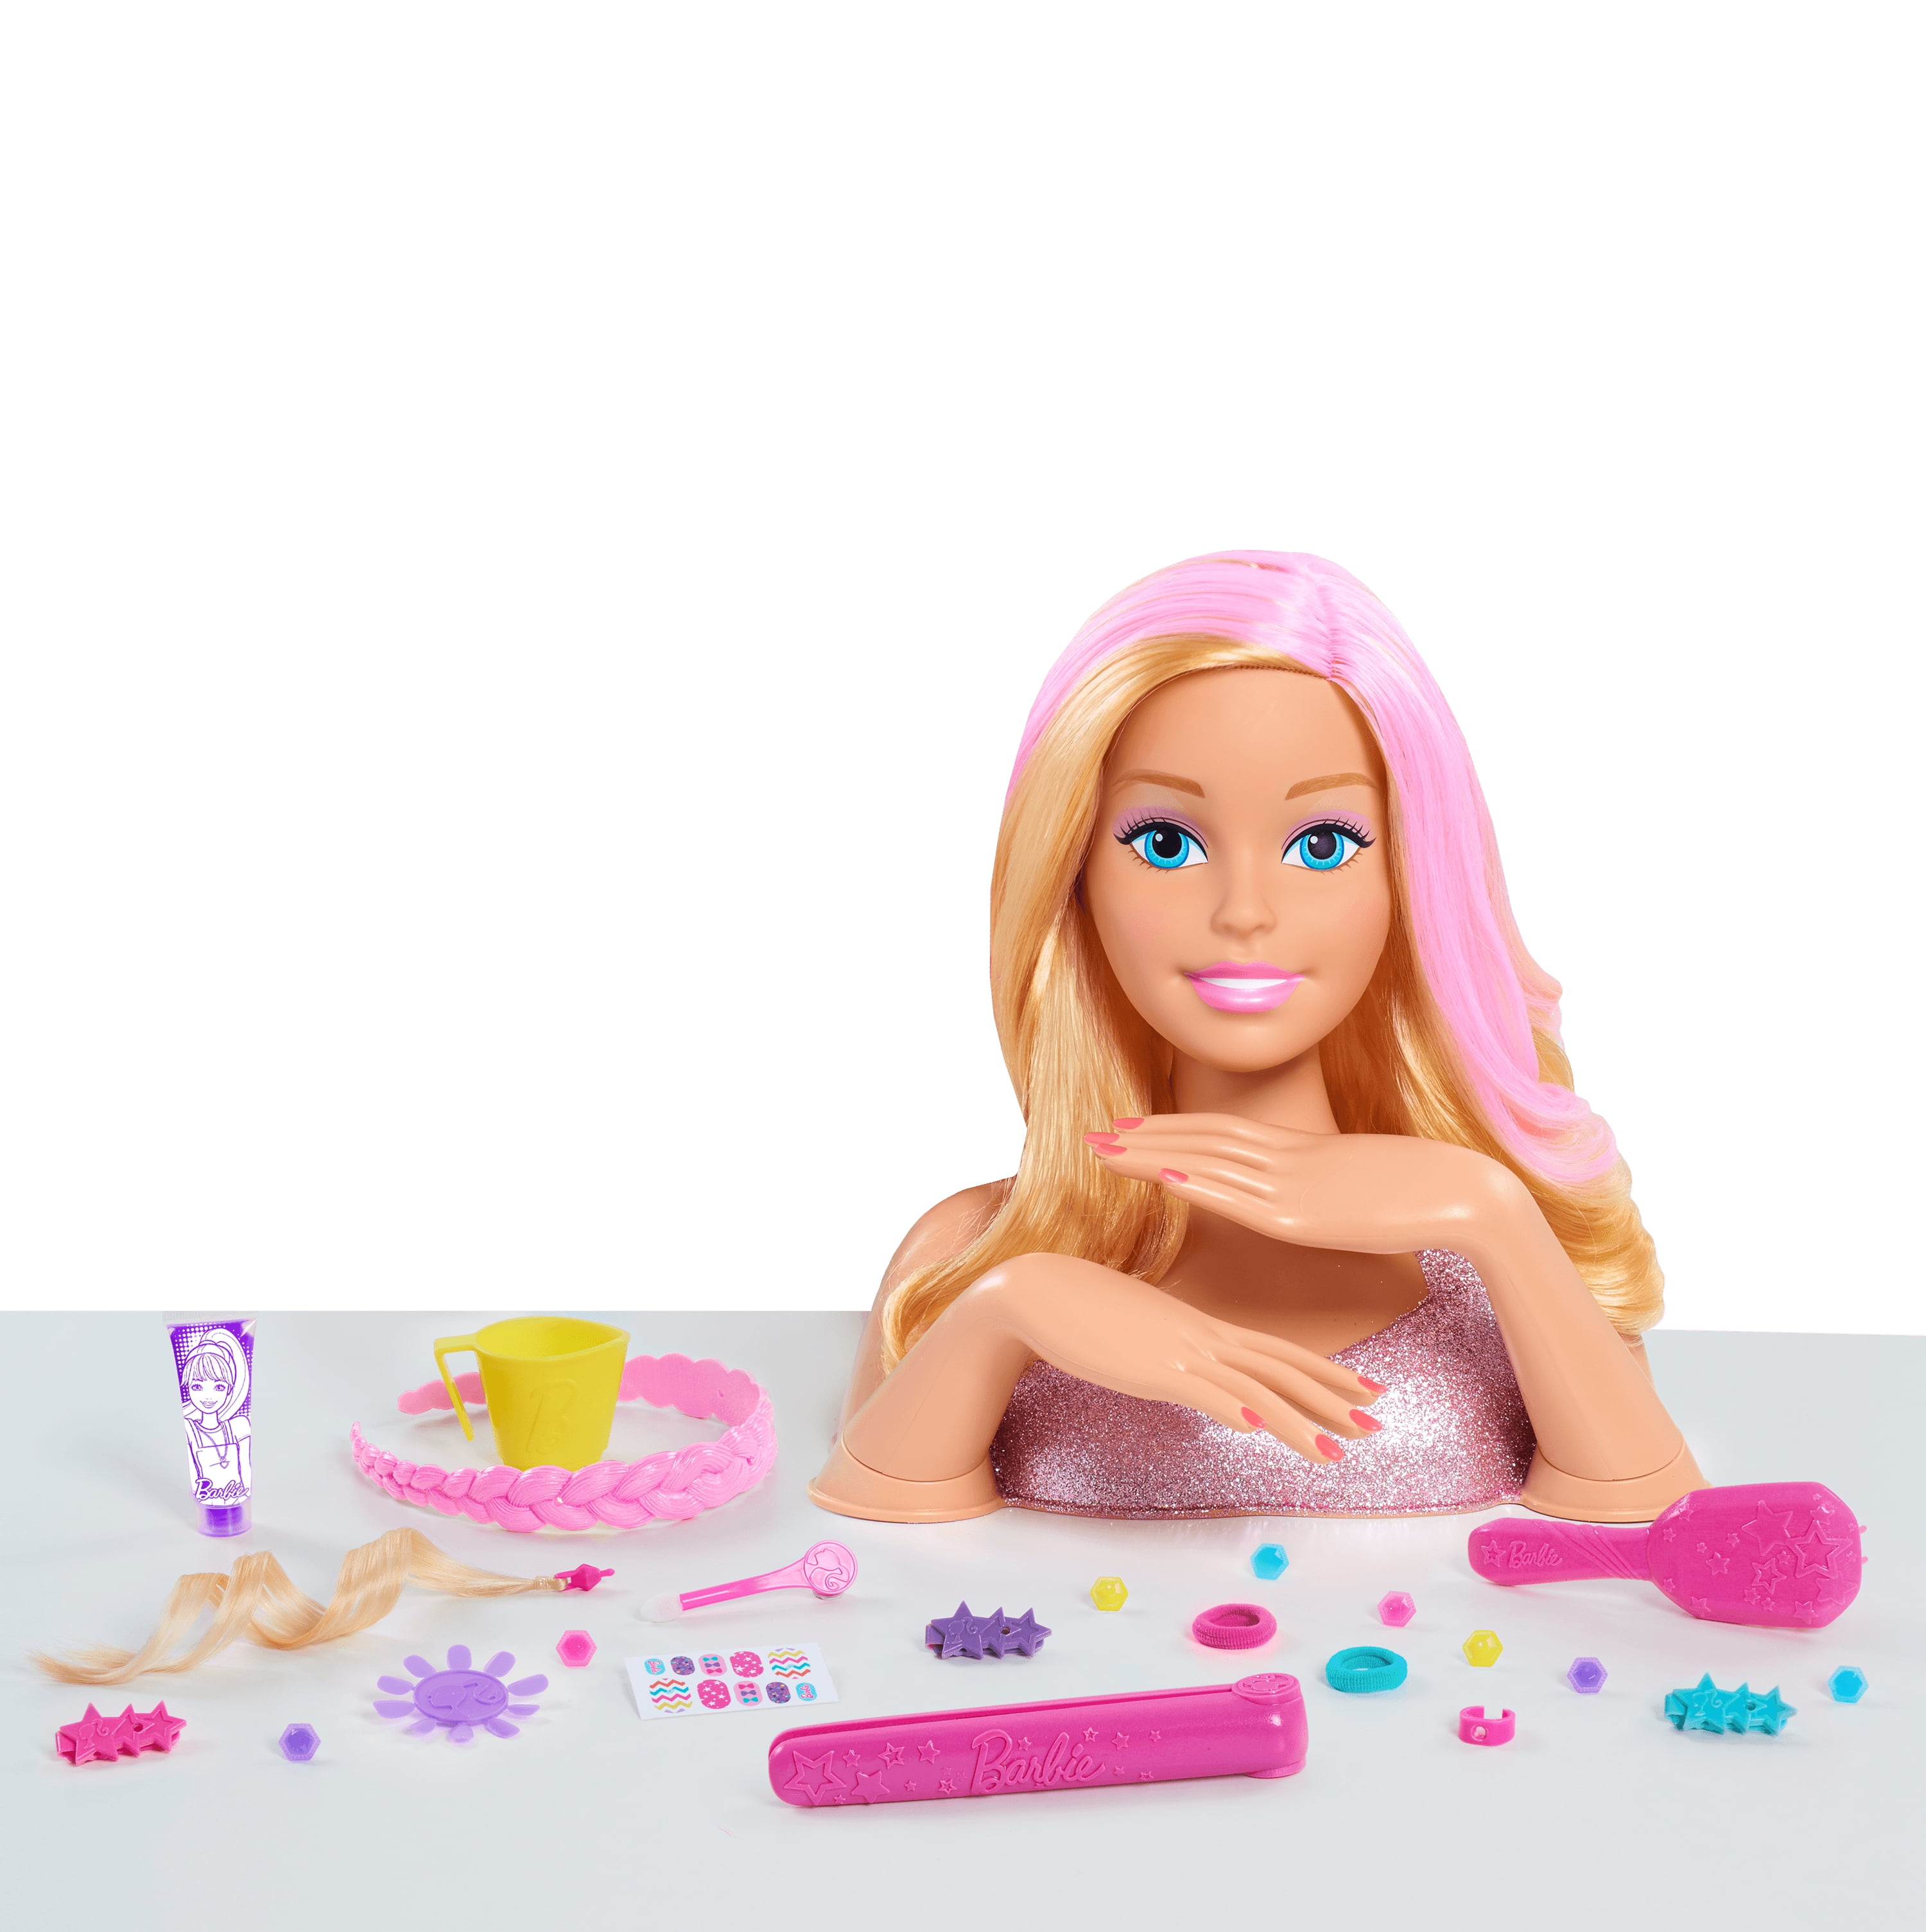 Barbie Doll Head Molds - Collectors Book Online